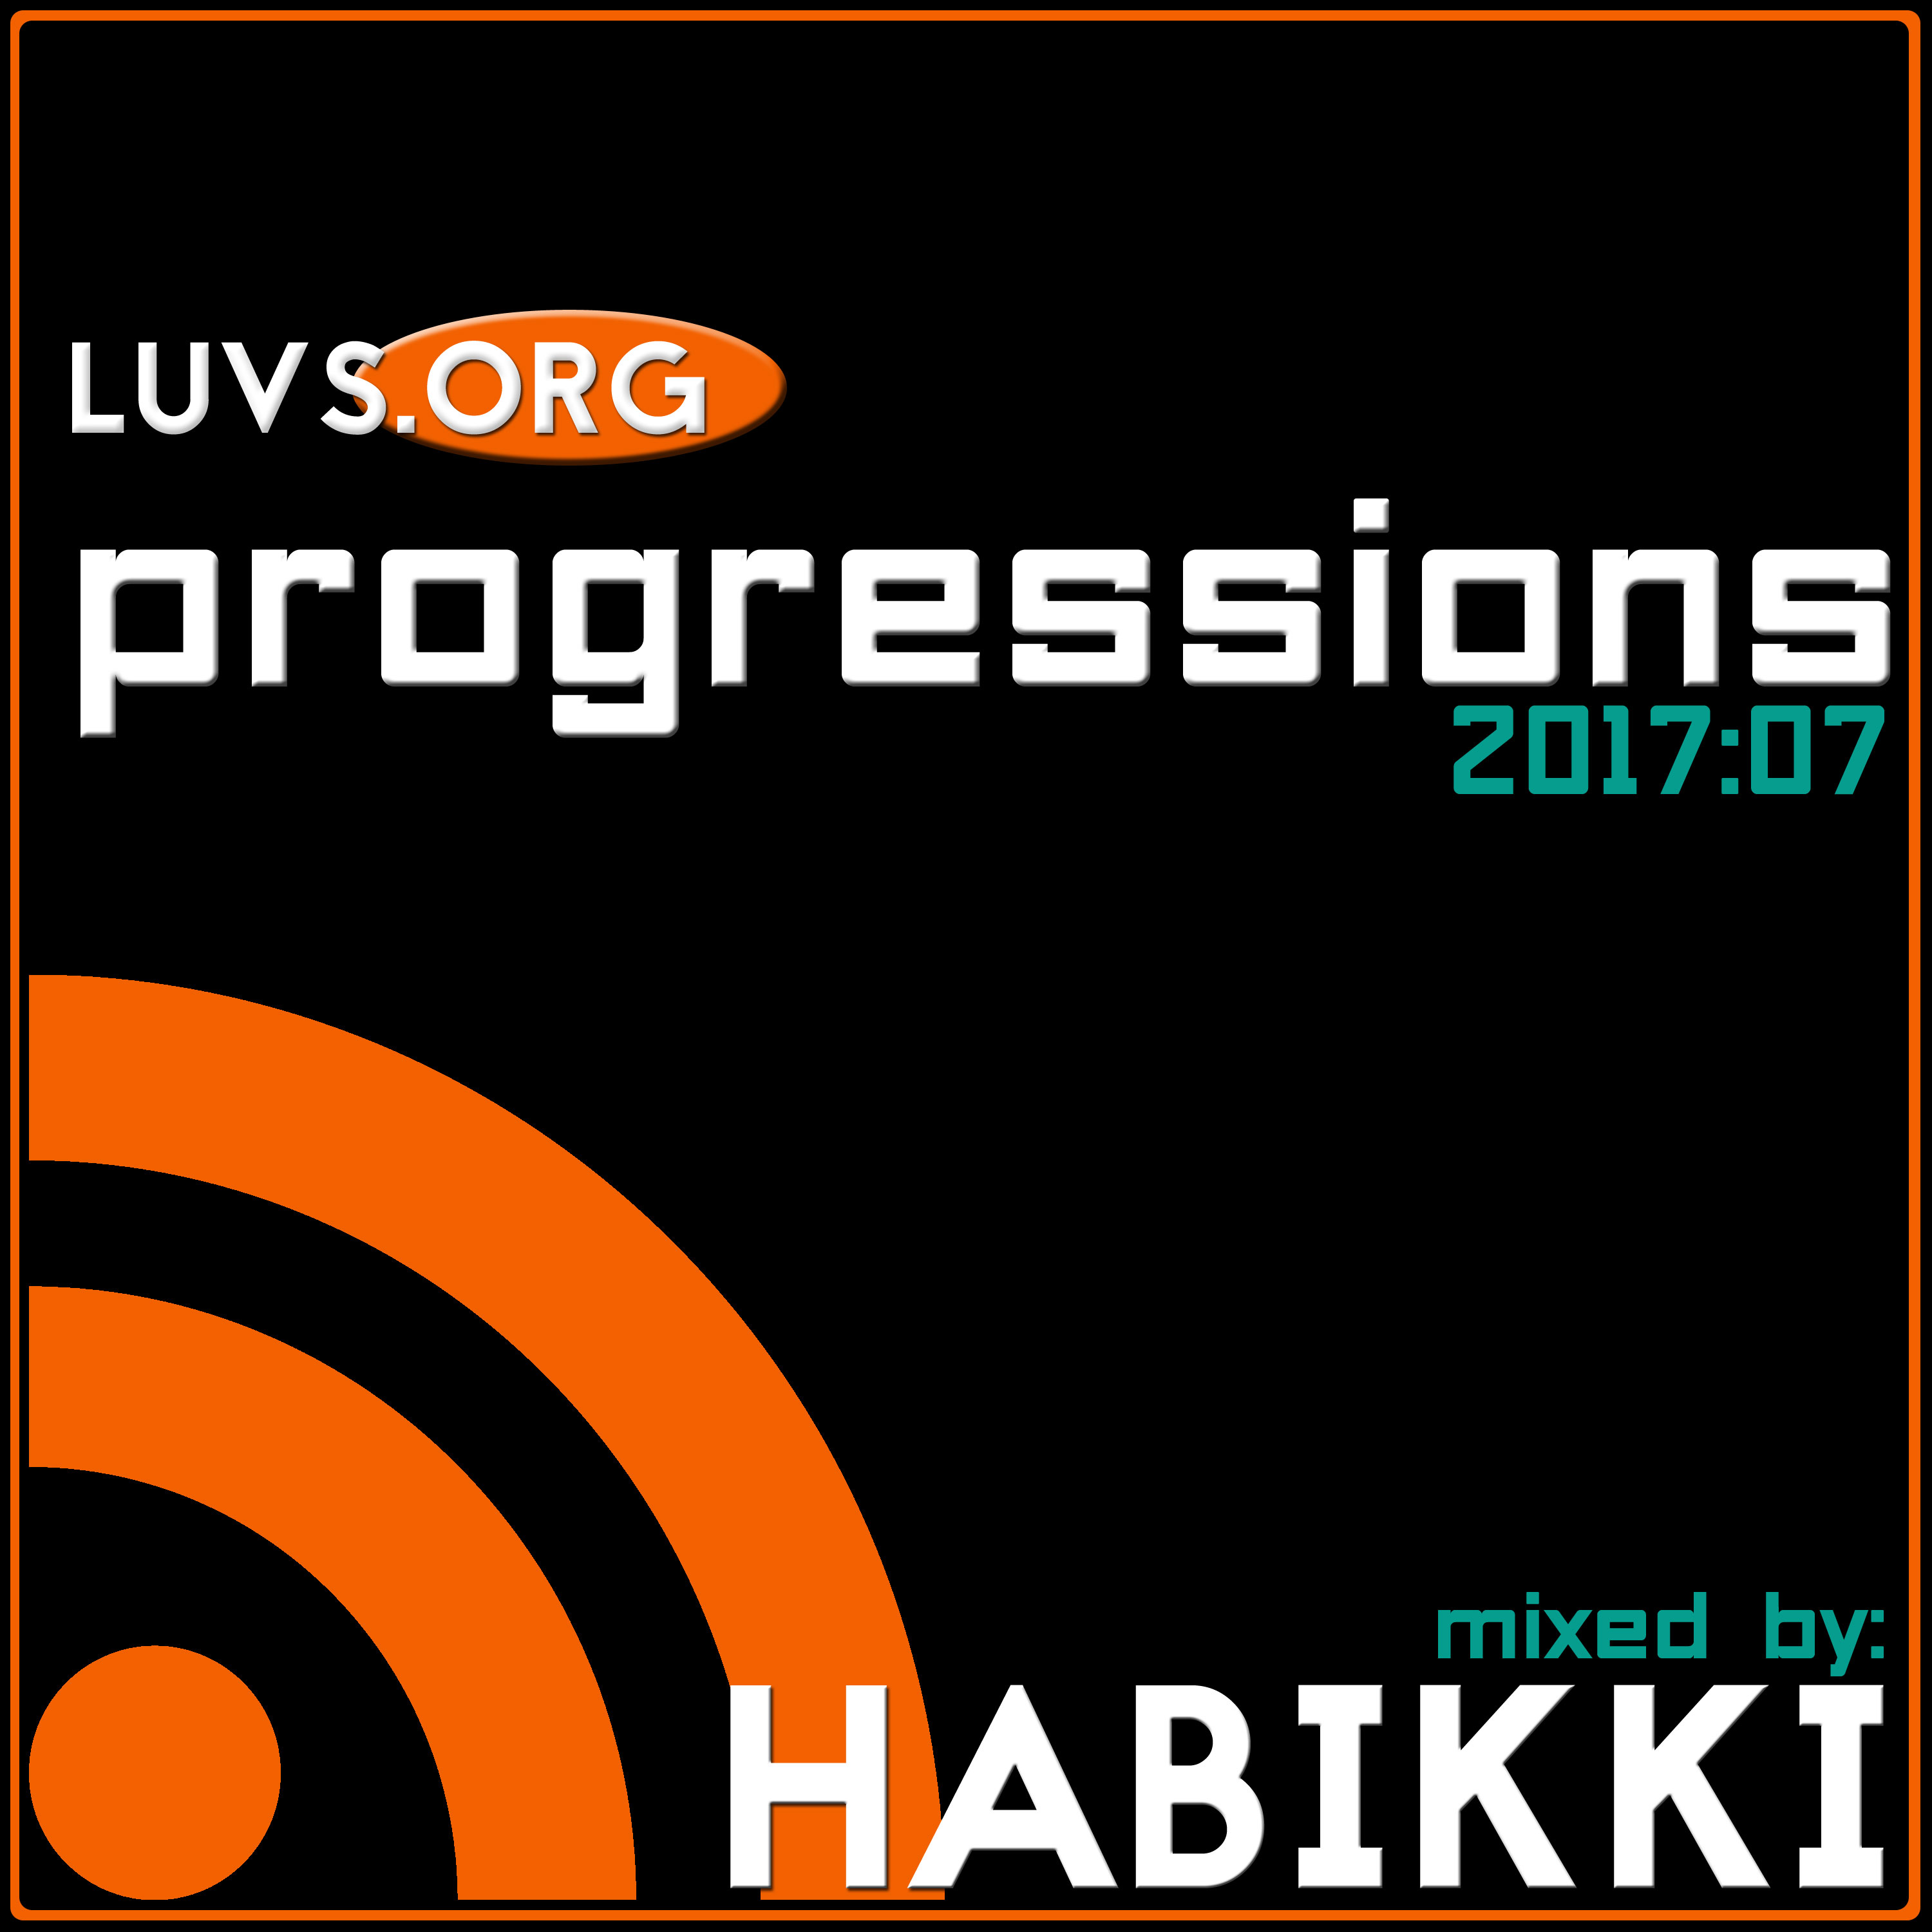 Luvs.org Sessions: [2017:07] Progressions